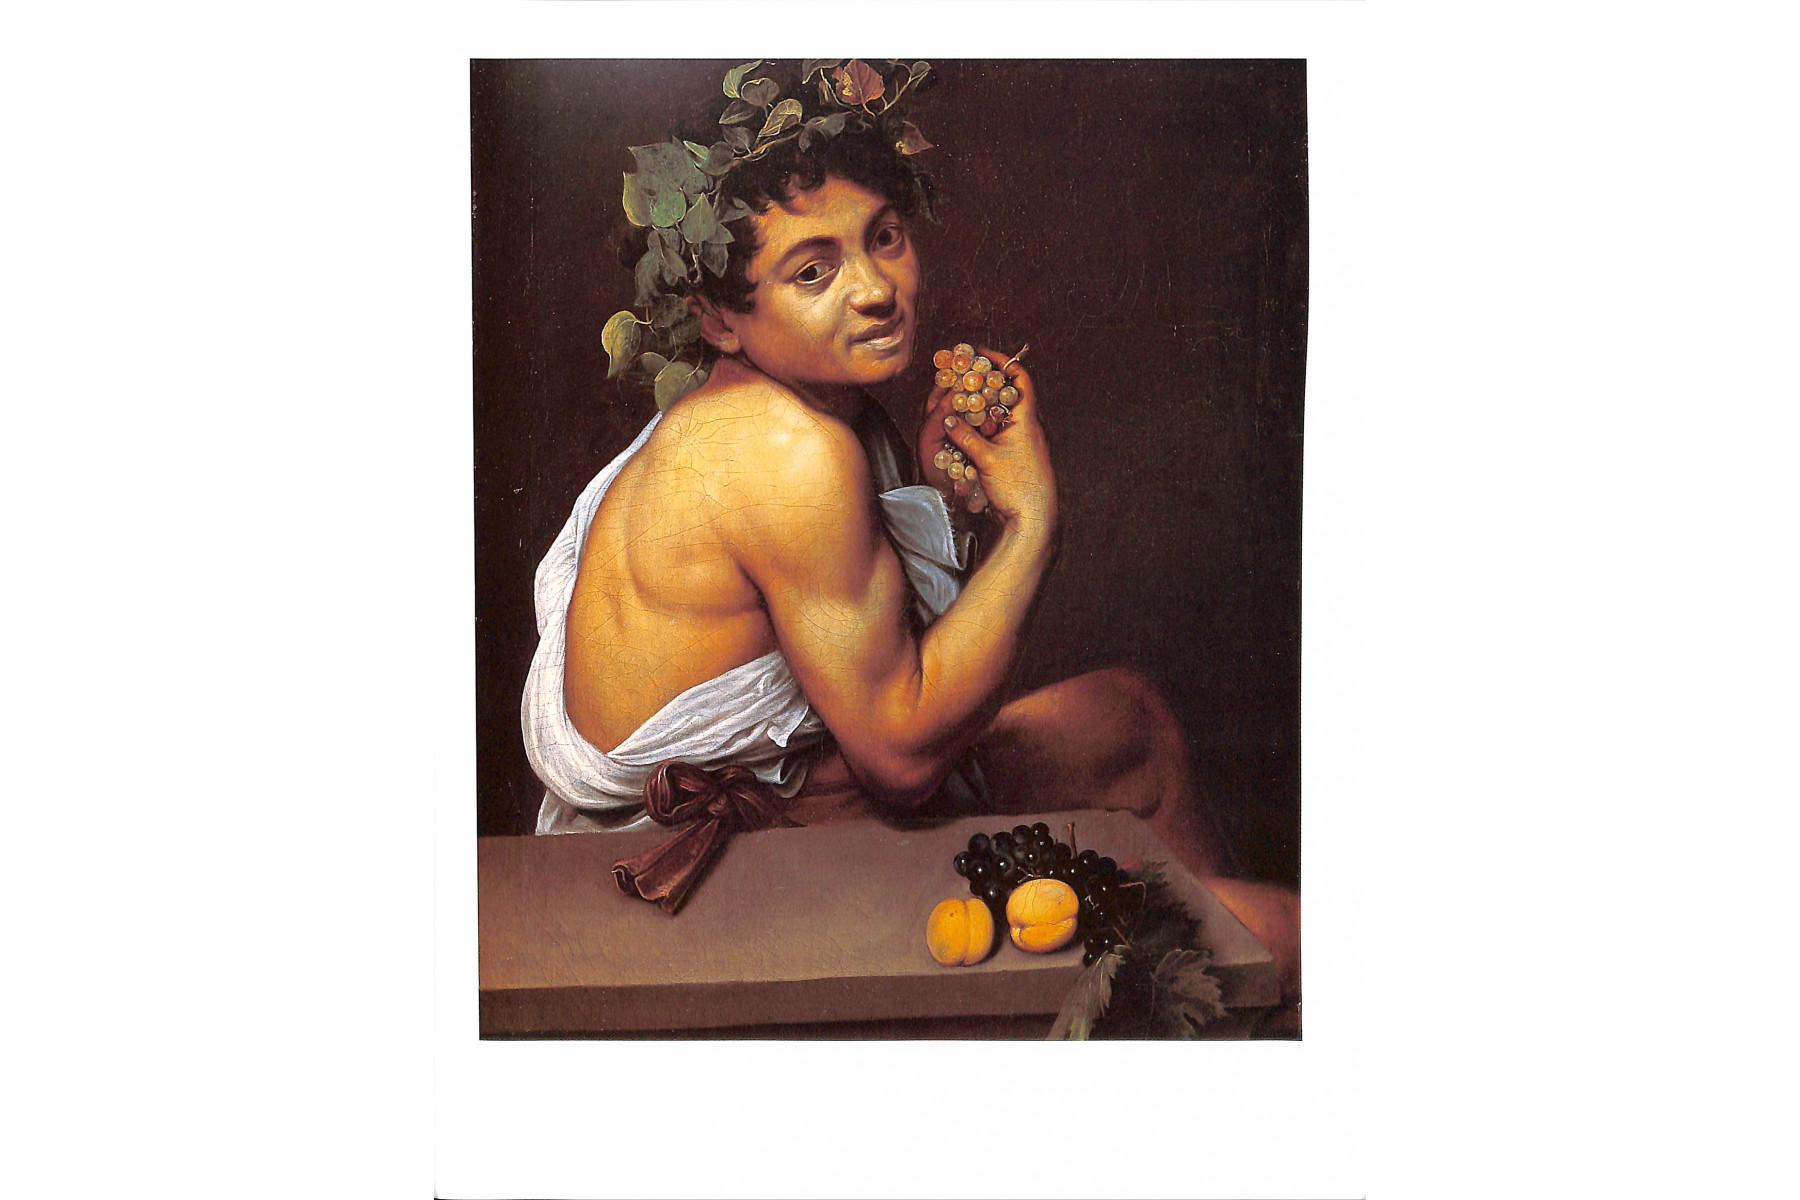 Caravaggio - Phaidon Colour Library